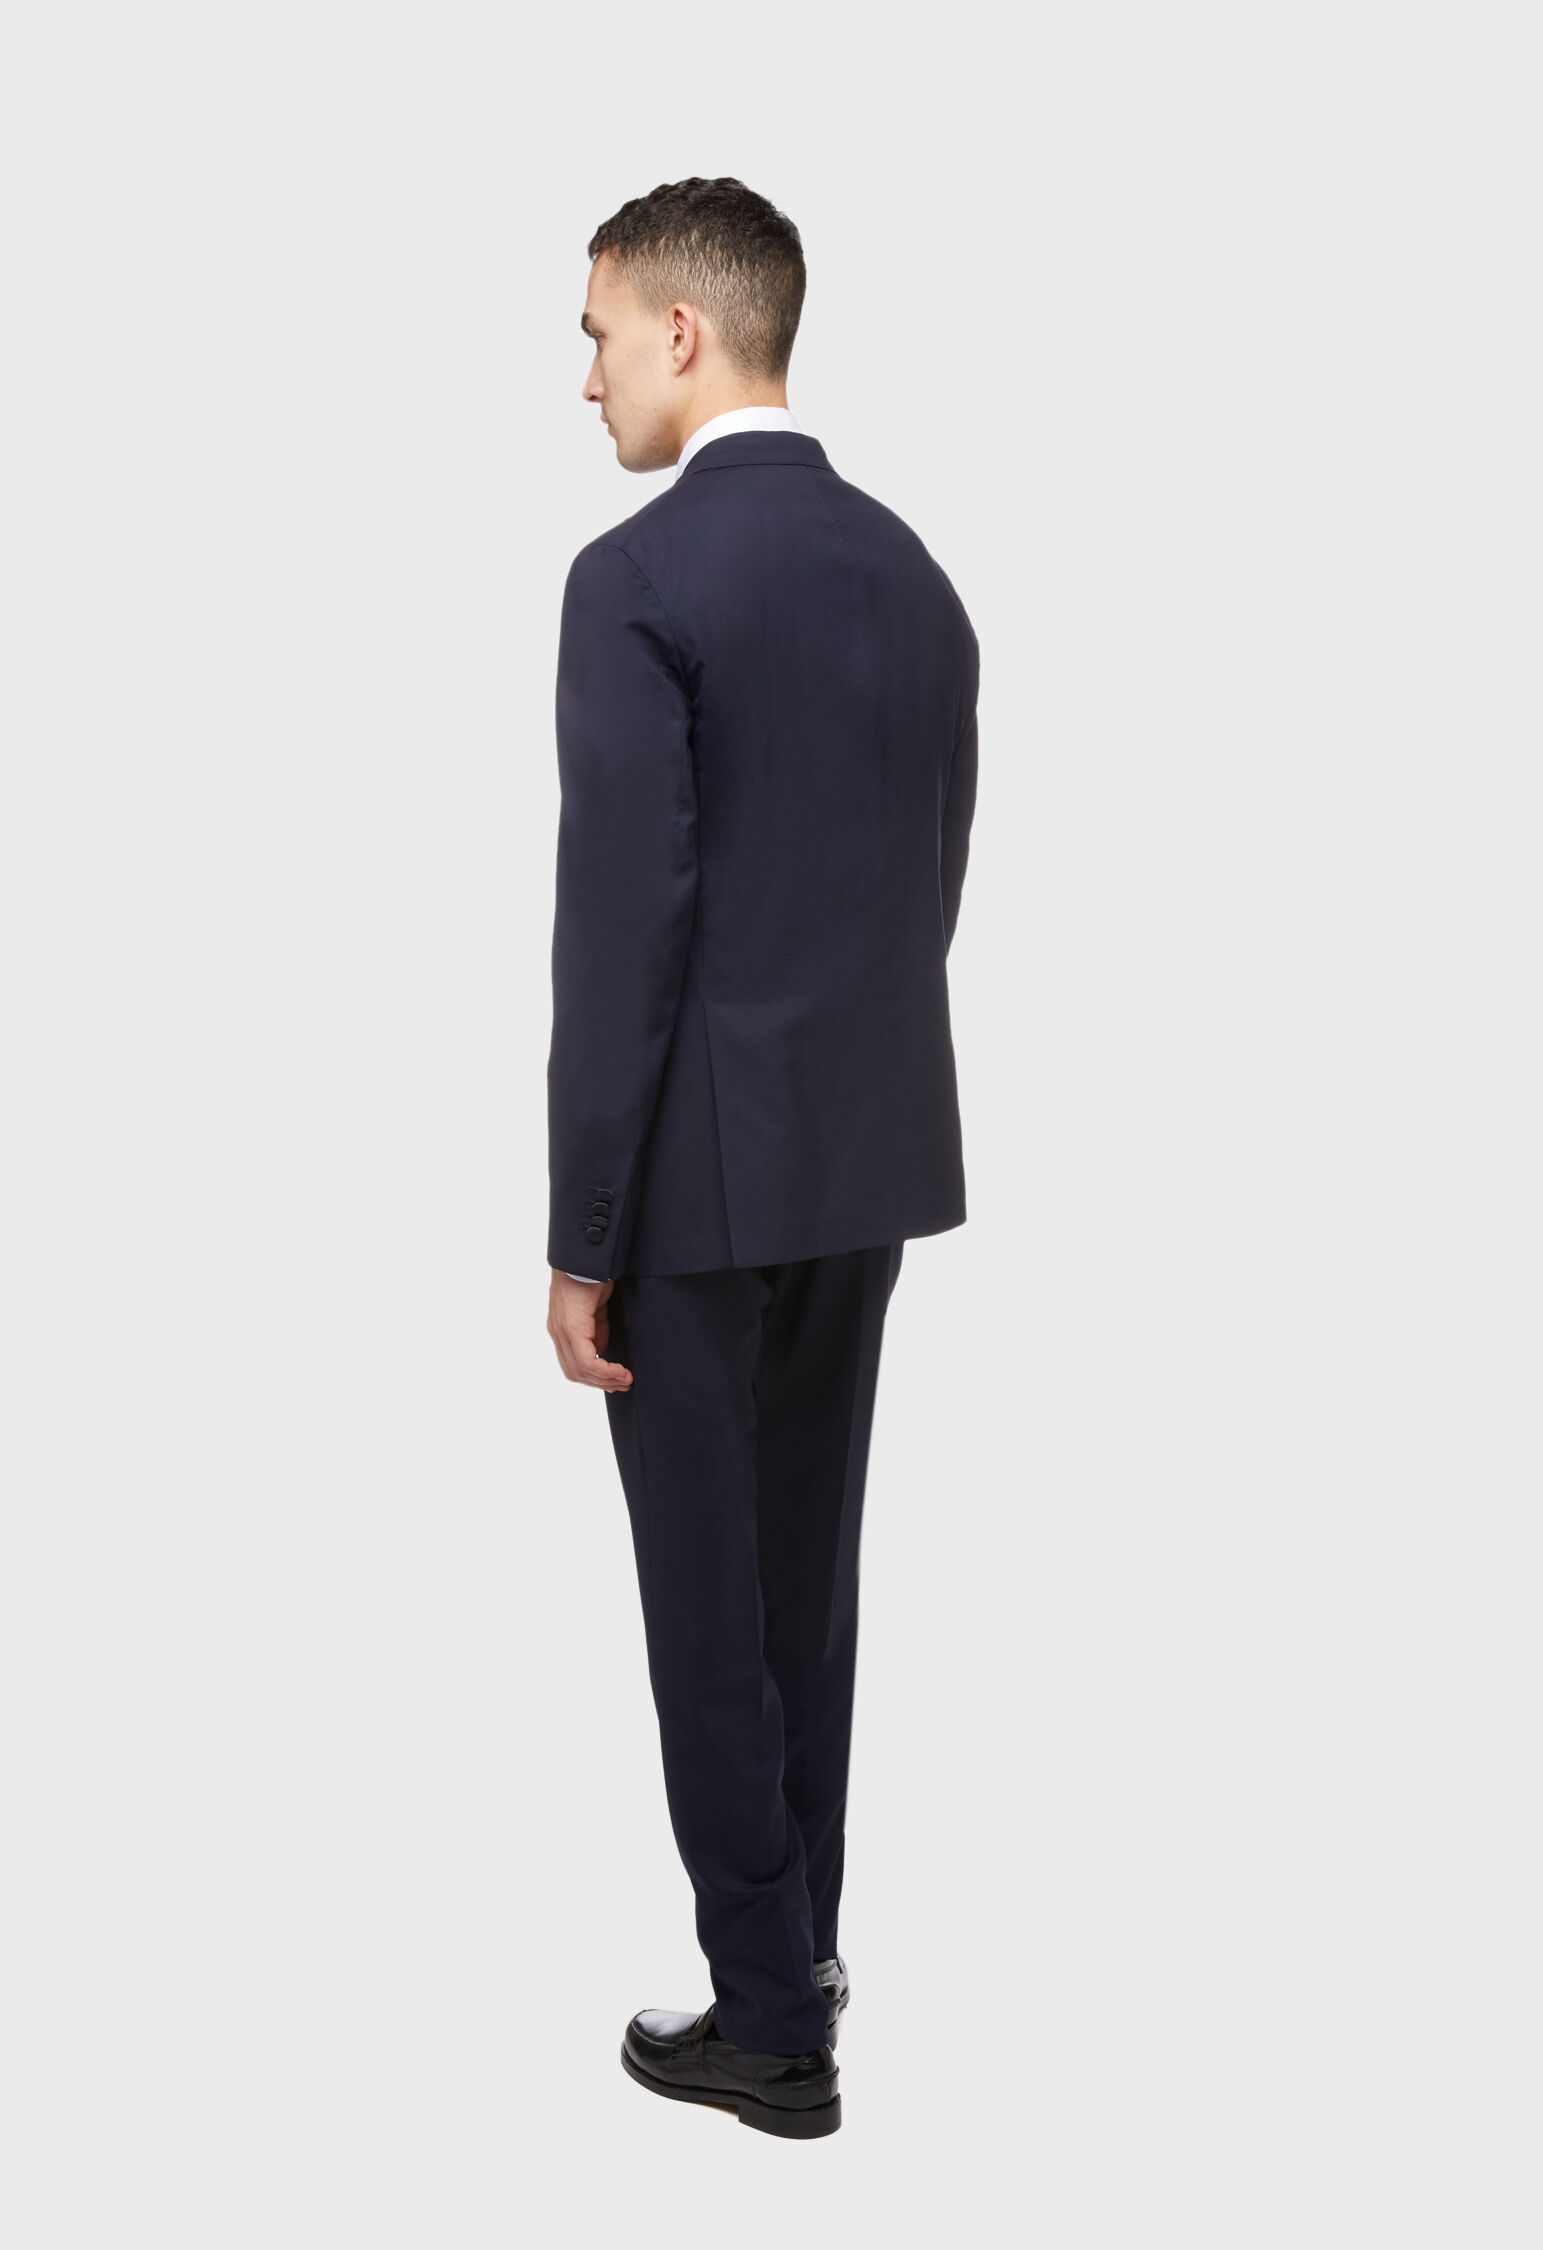 Navy Blue Suit | Men's Wedding Suit Rentals | Generation Tux